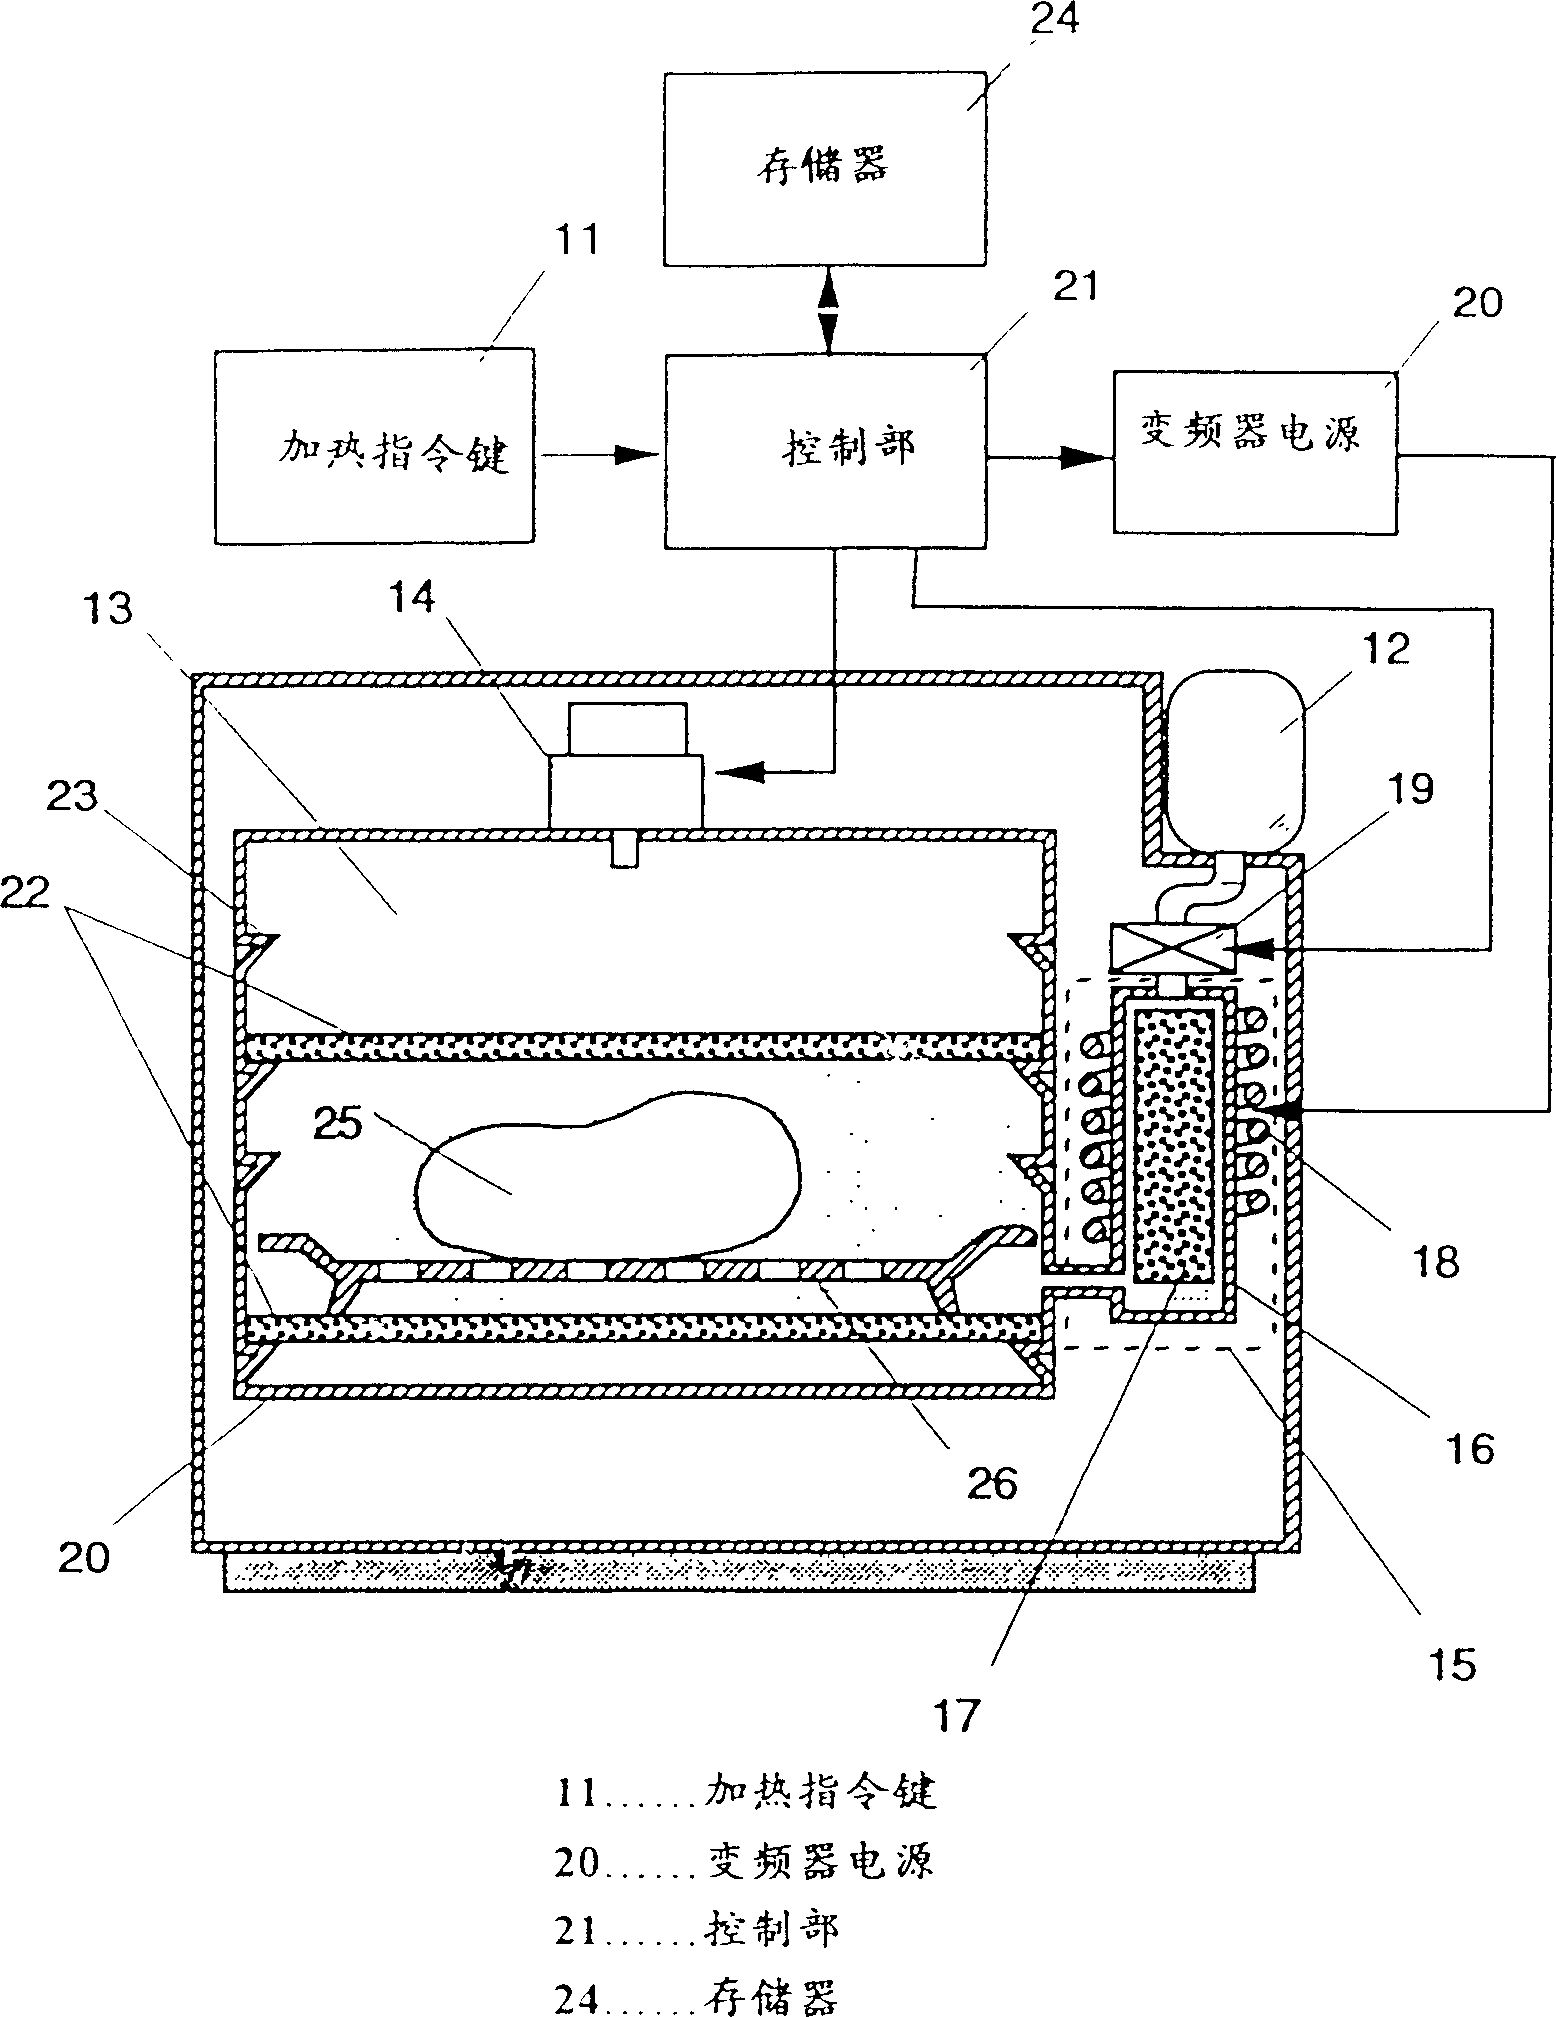 Microwave heating apparatus and method